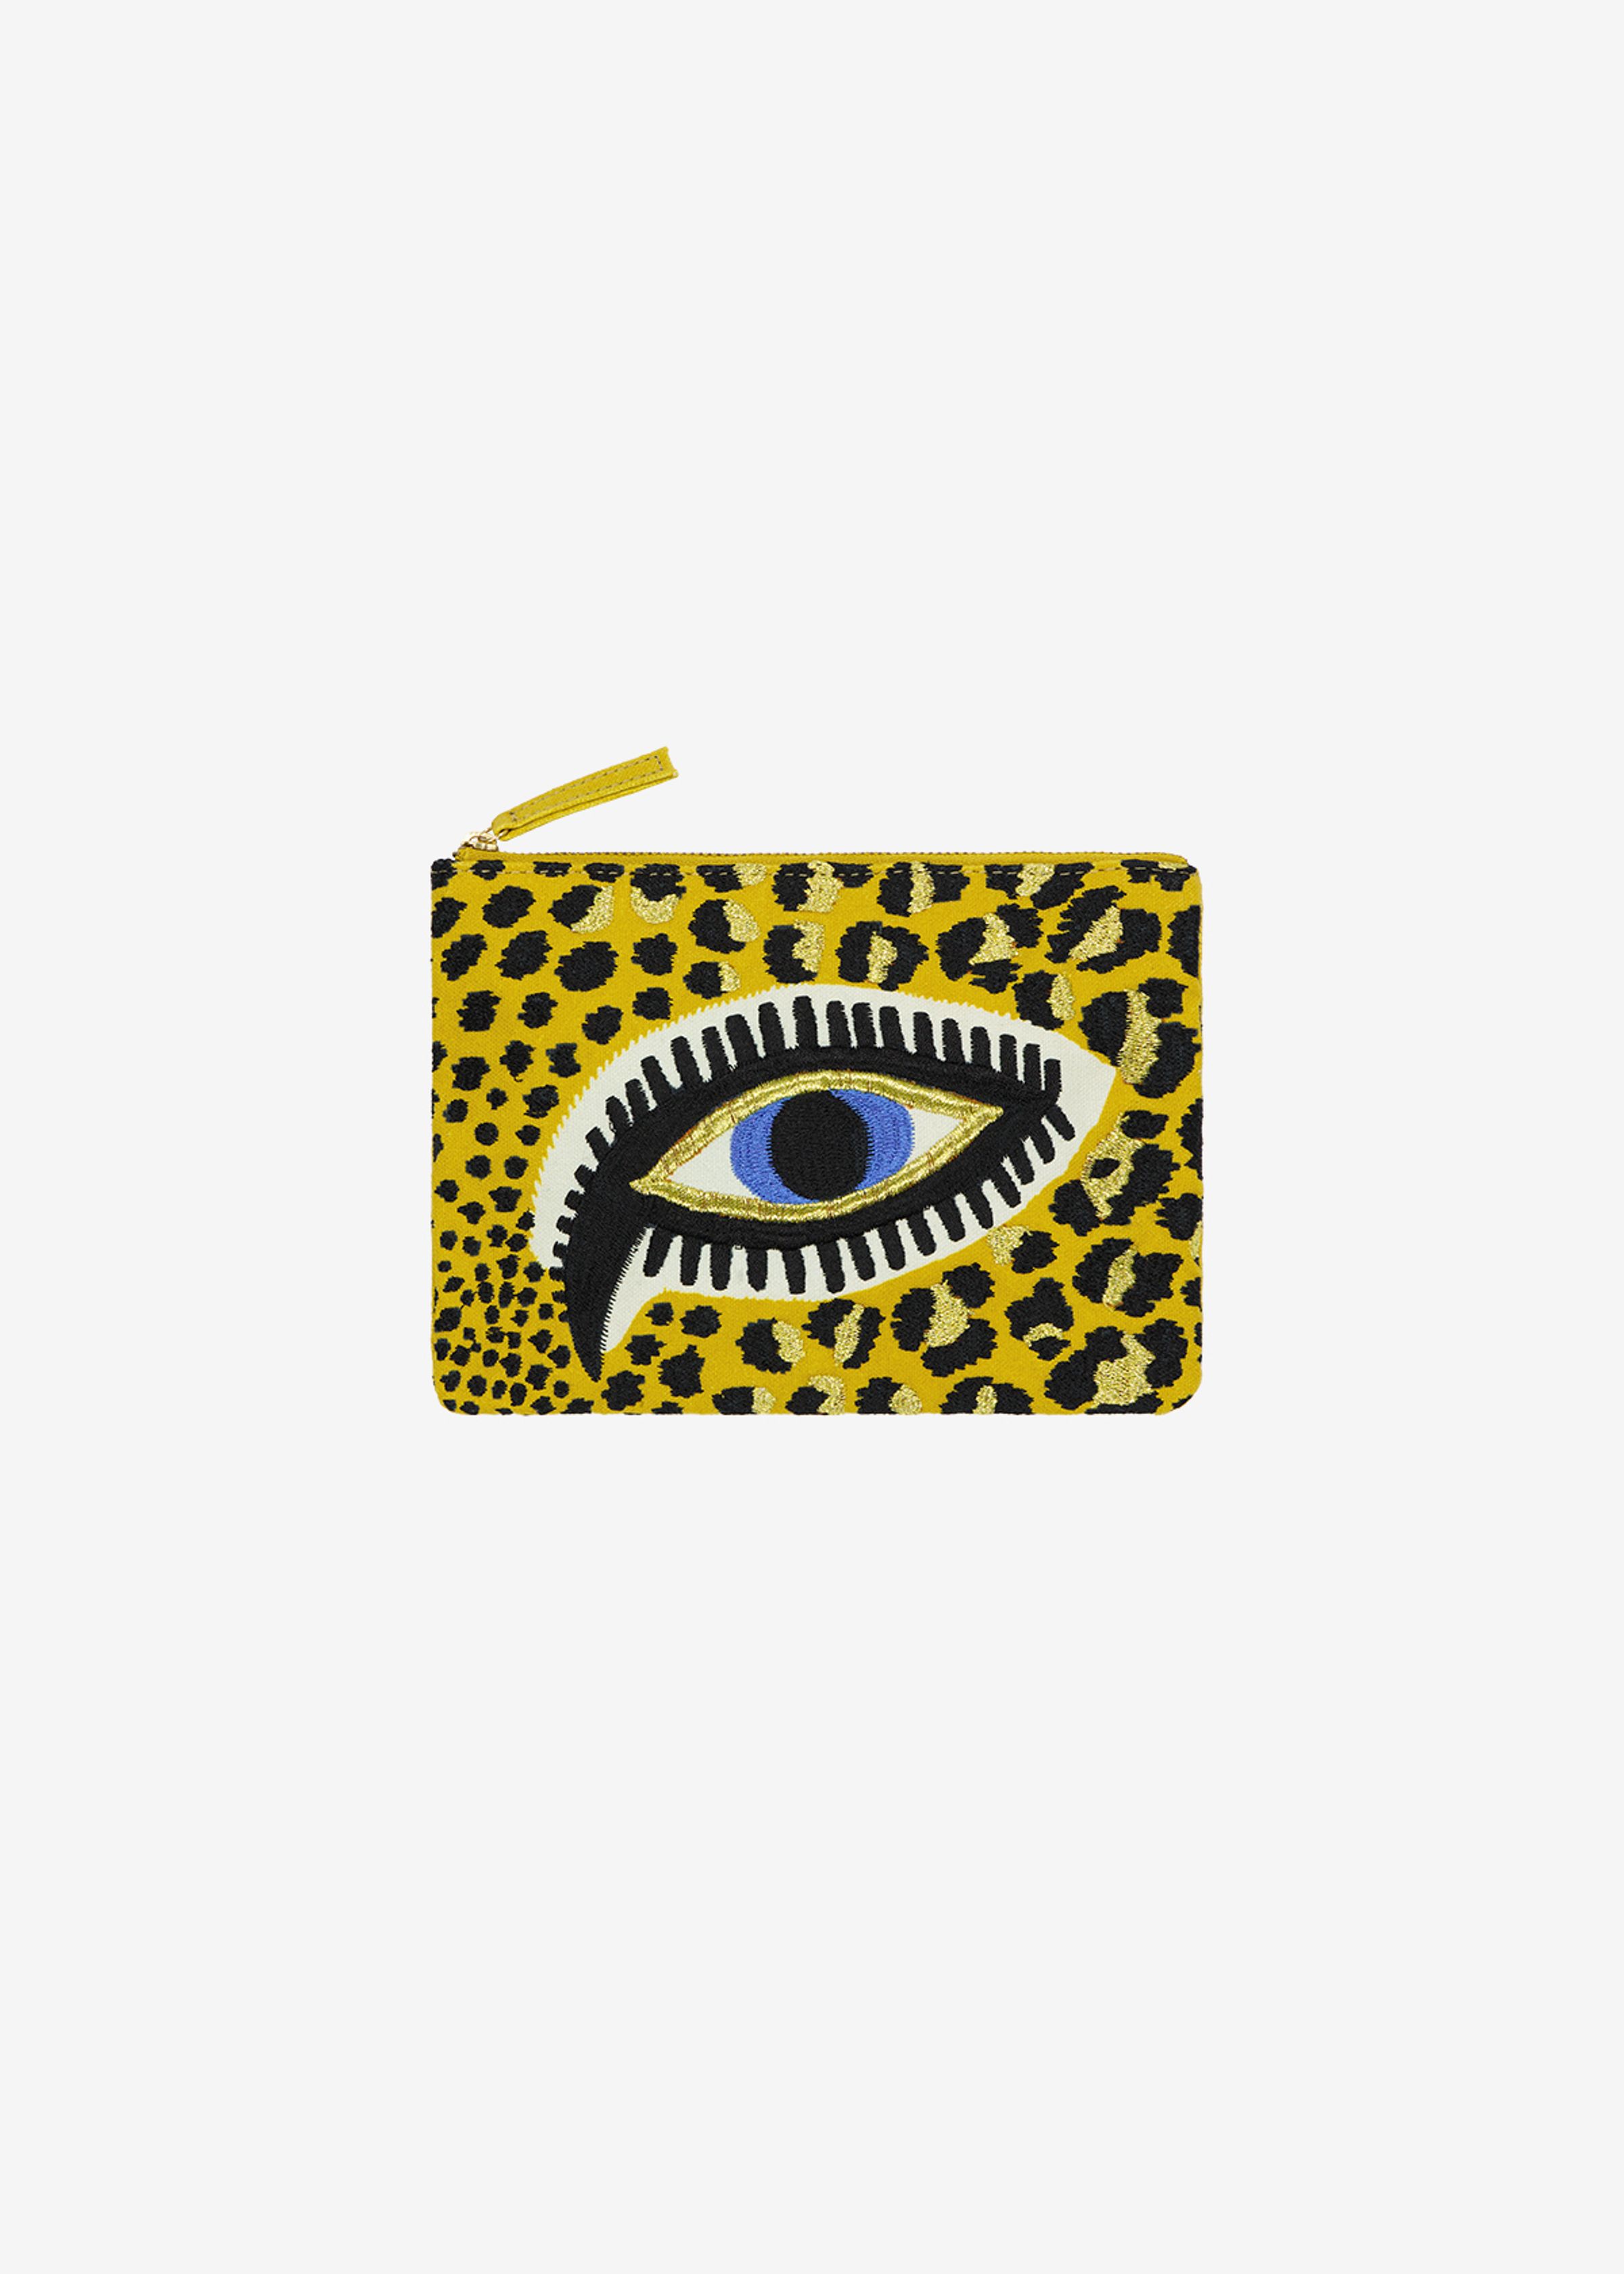 Bestickter Beutel - Leopard Eyes - Gelb